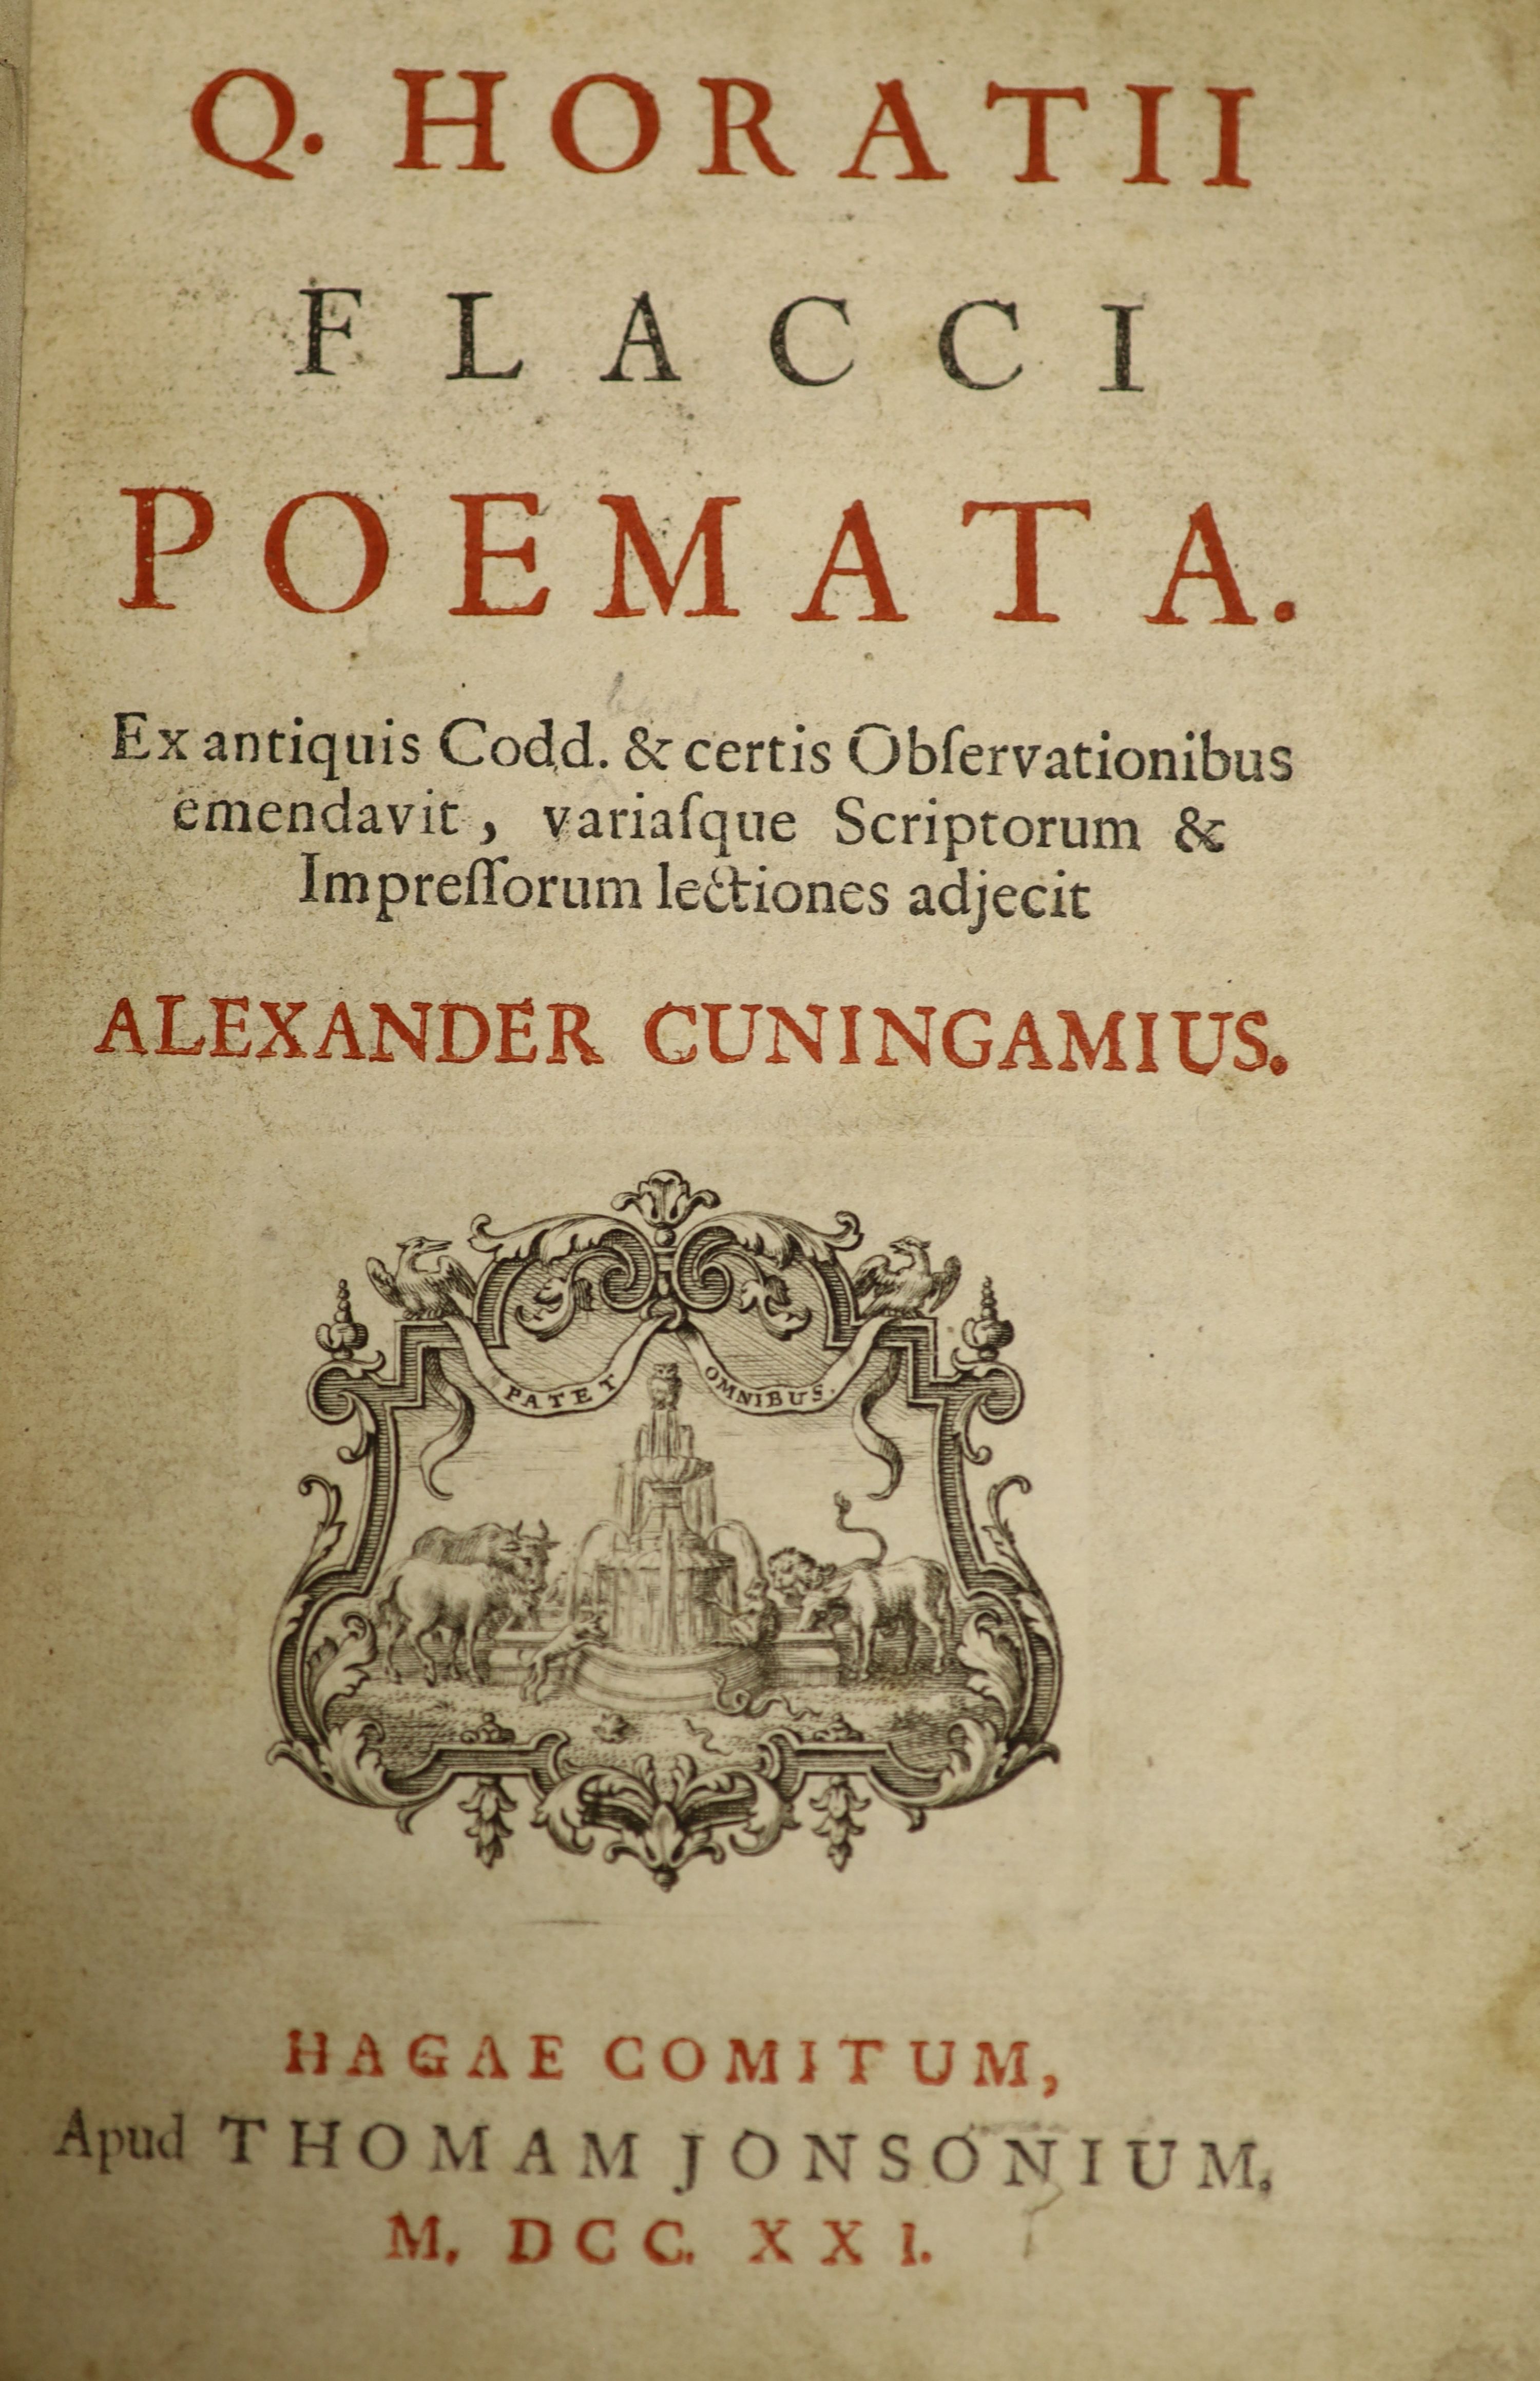 Cunningham, Alexander (editor) - Q. Horatii Flacci Poemata, vol 1, (of 2), 8vo, half calf, engraved frontispiece, Thomam Jonsonium, Hagar Comitum, 1721